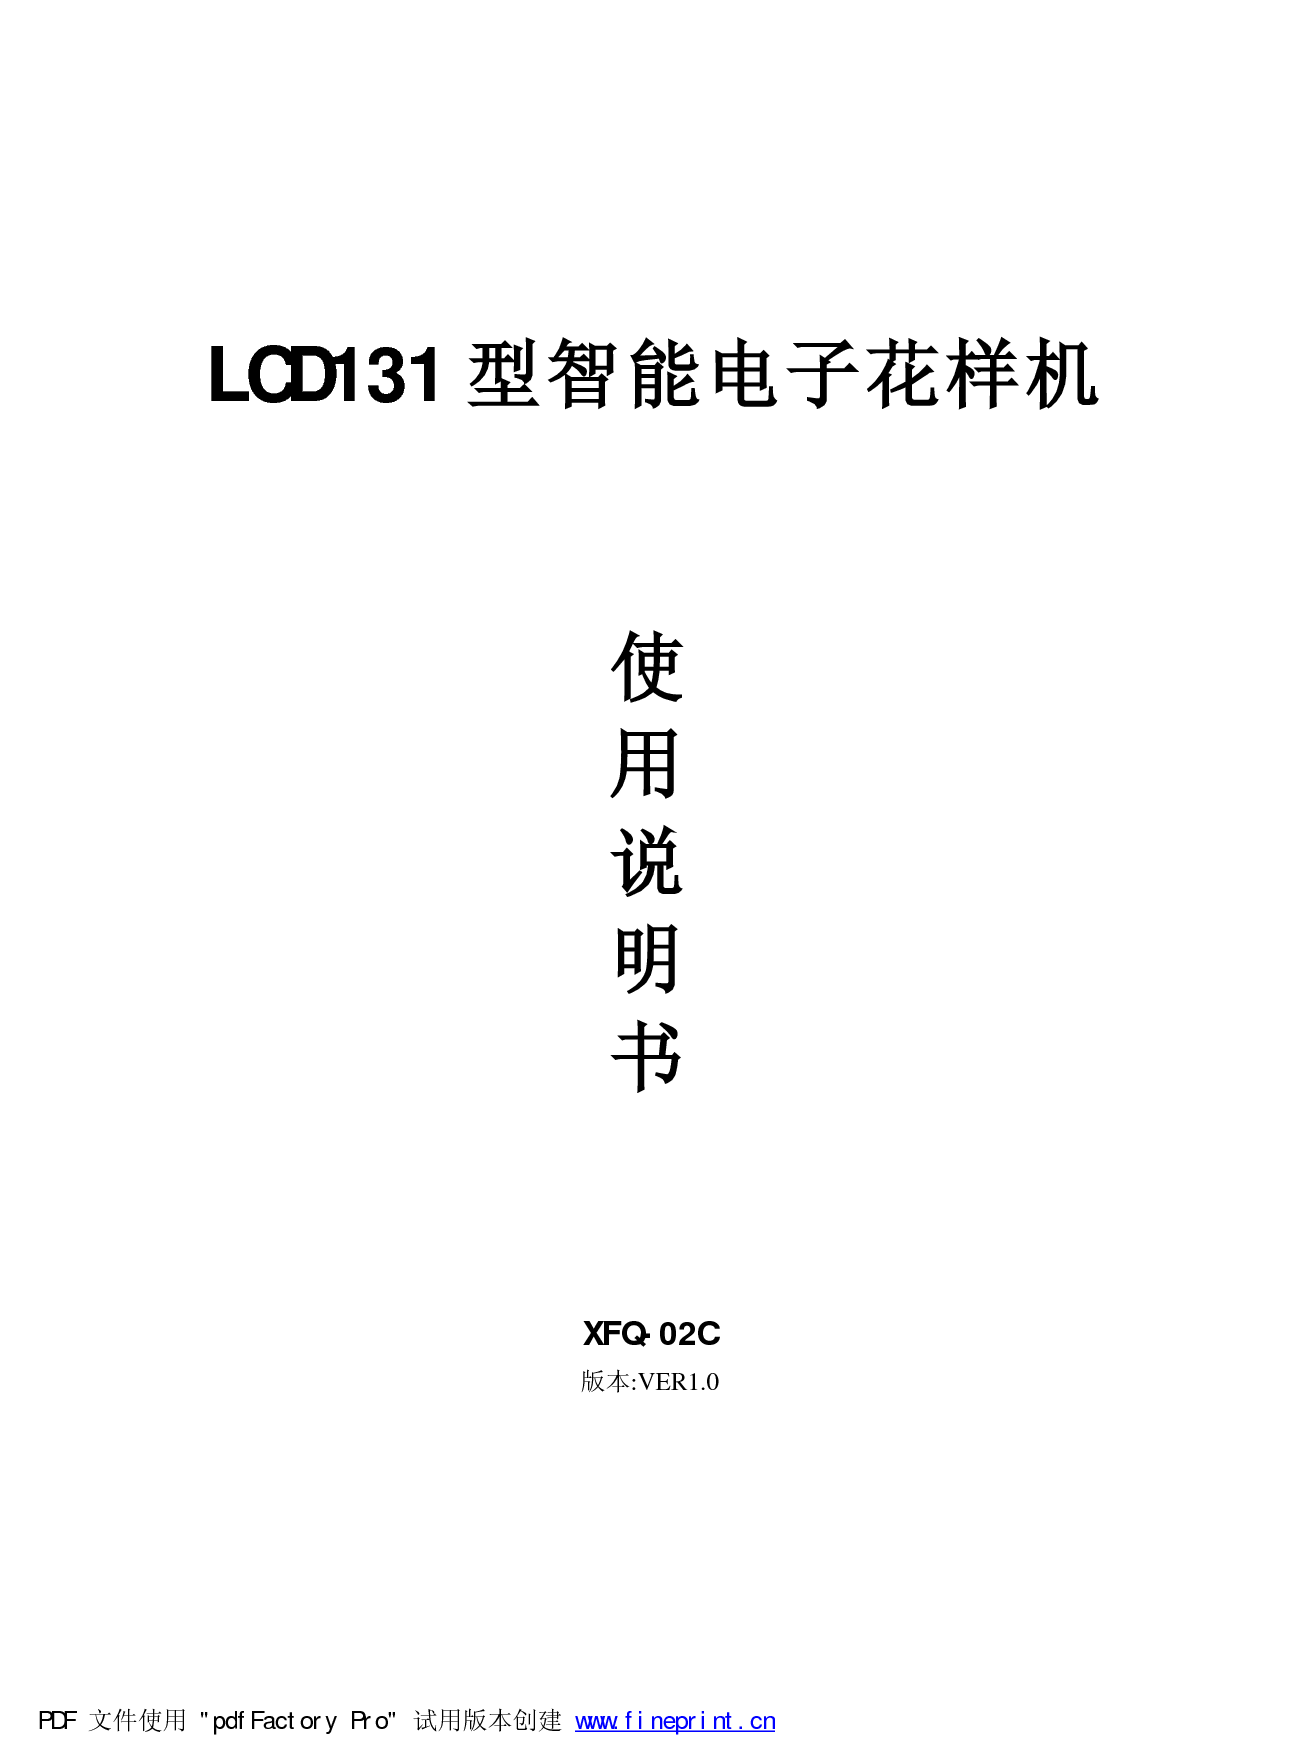 标准 Typical LCD131, XFQ-02C 使用说明书 封面